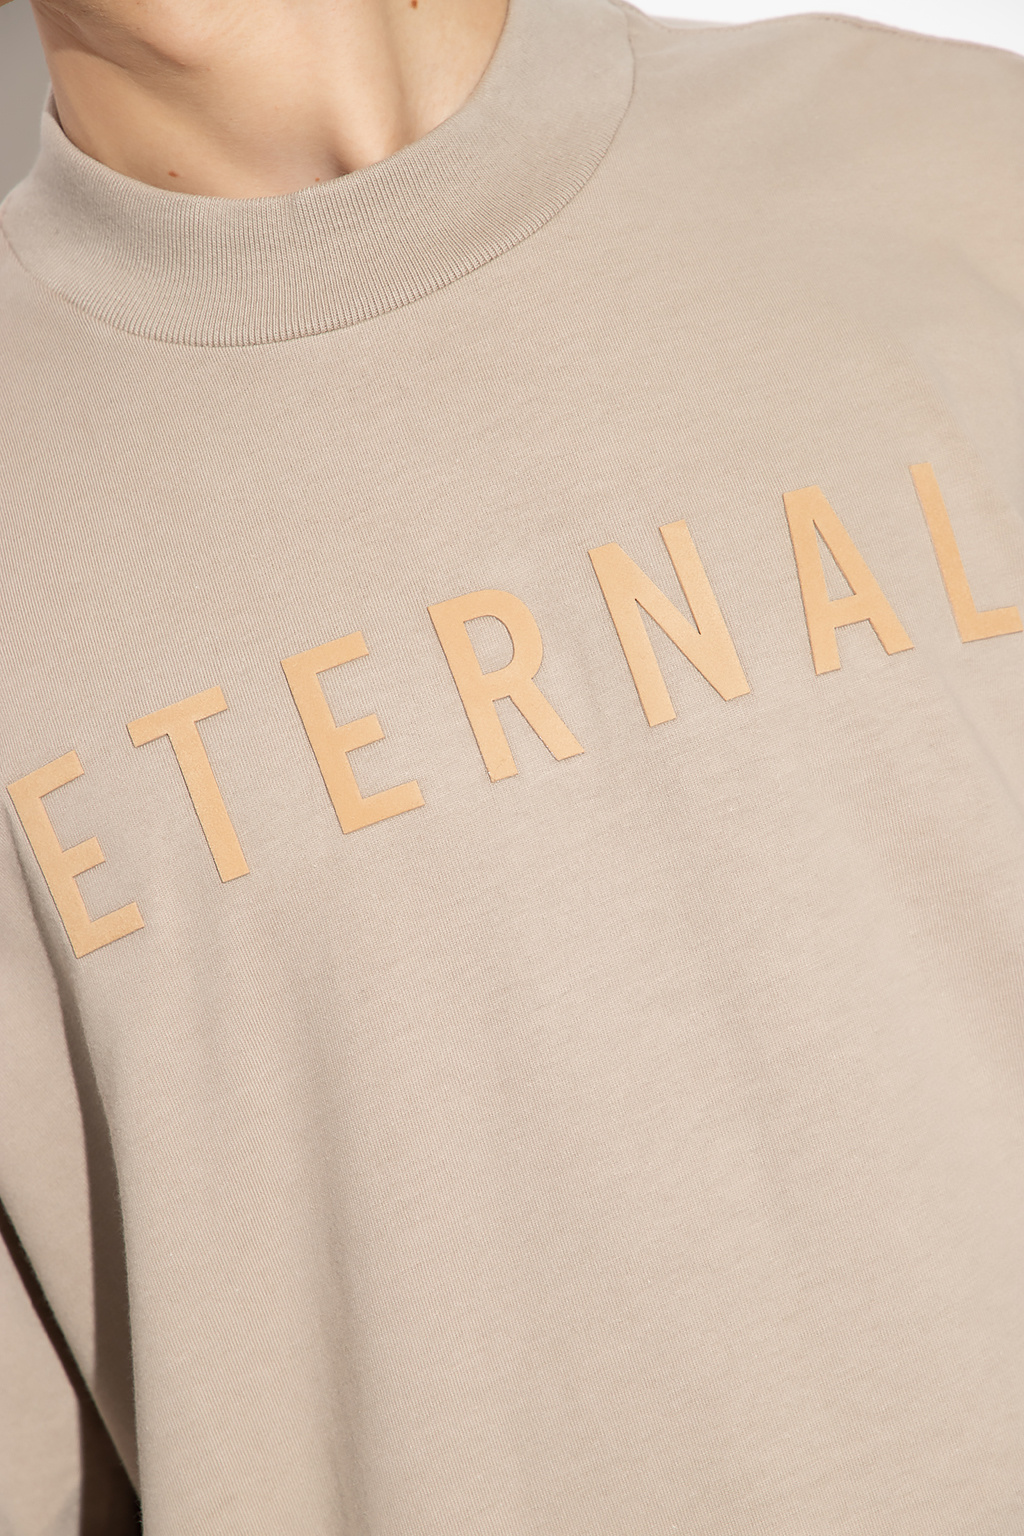 Fear of God Men's Eternal Cotton T-Shirt - Black - Size Xs